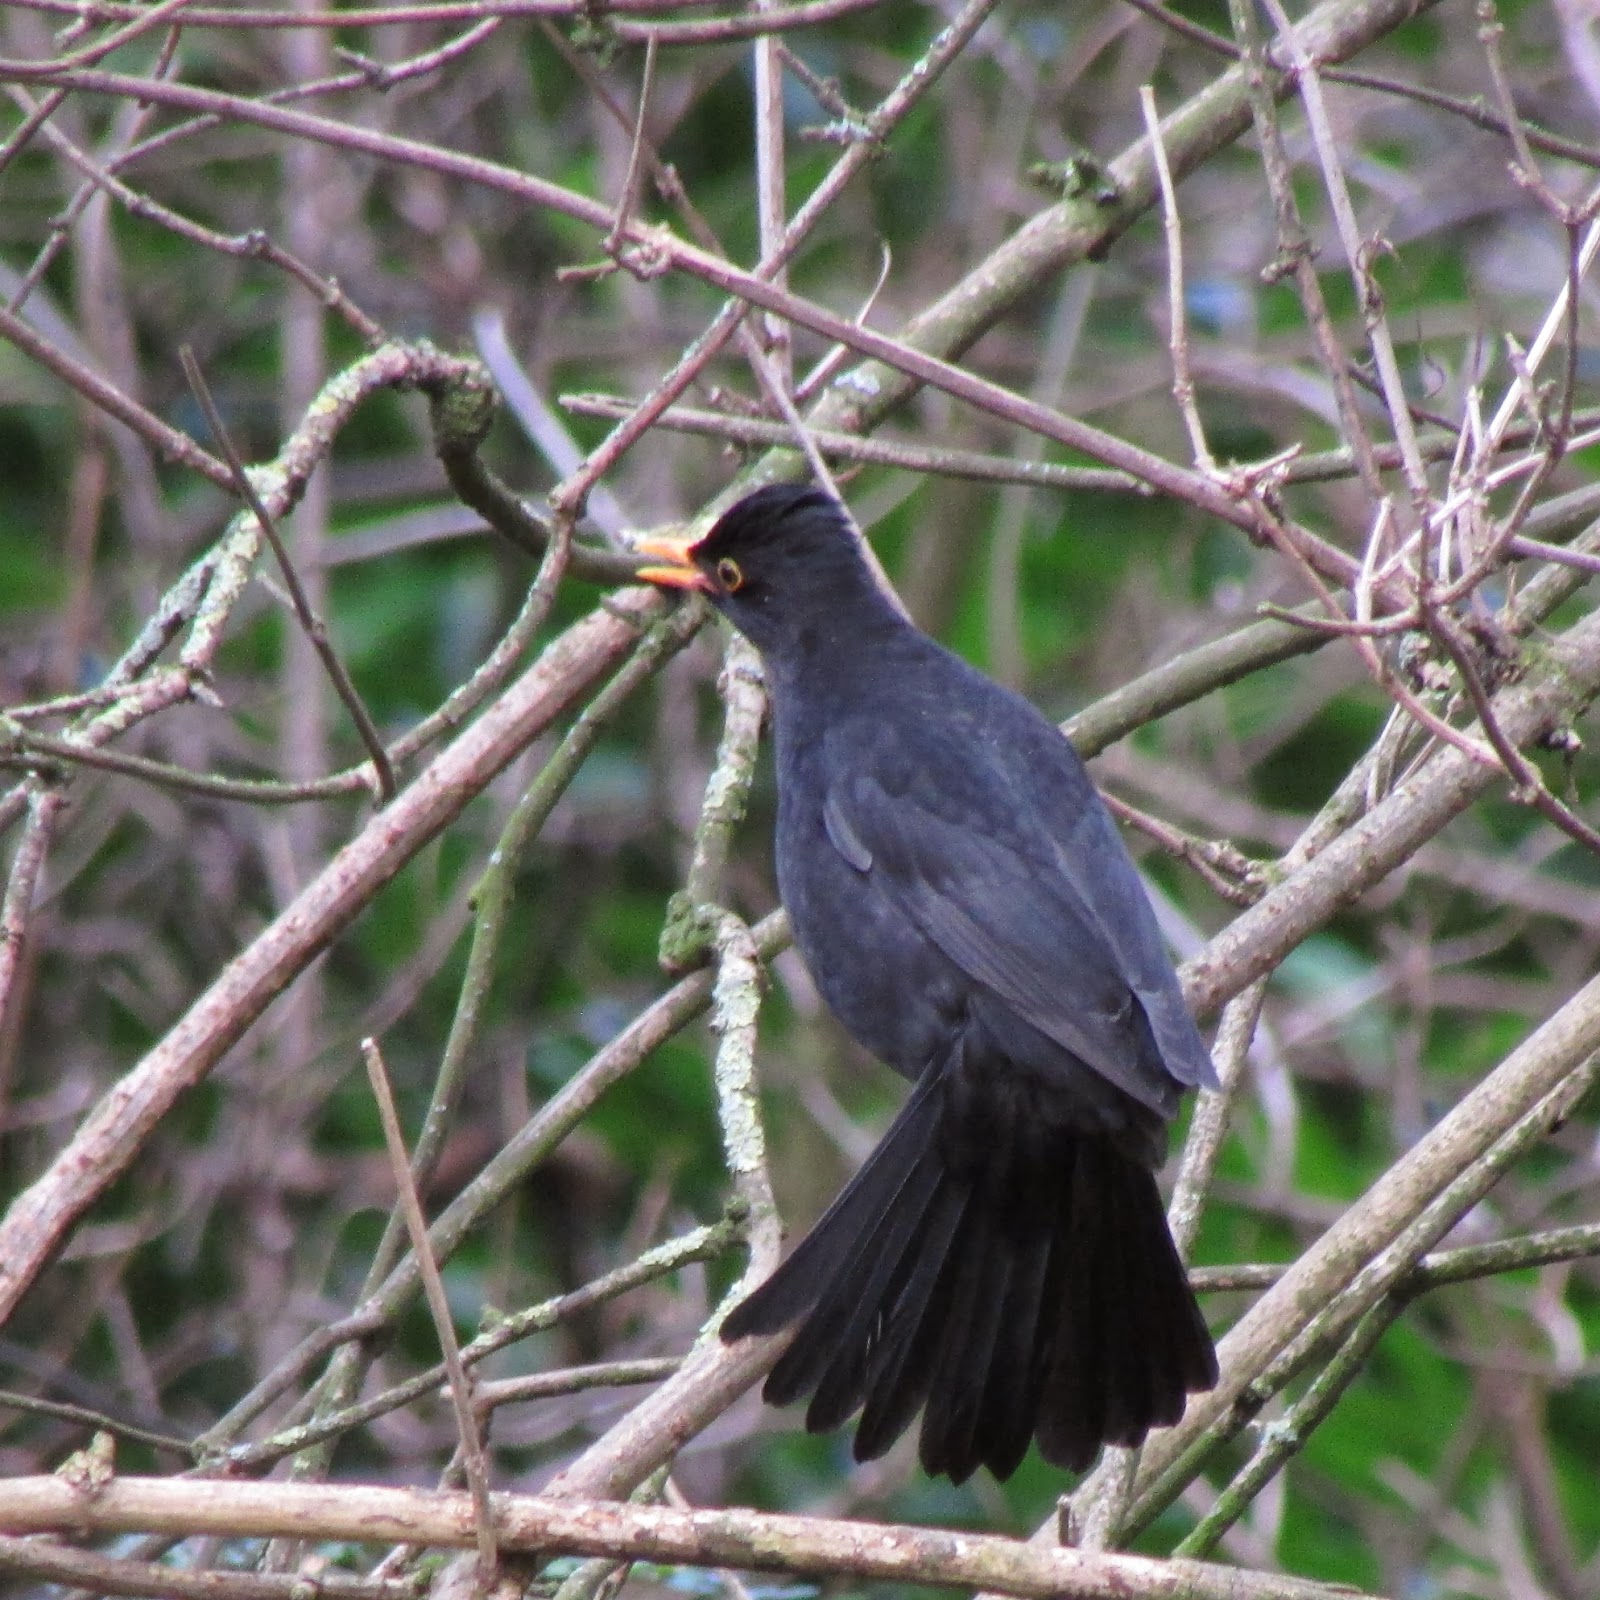 The Rattling Crow: Male Blackbird courtship display